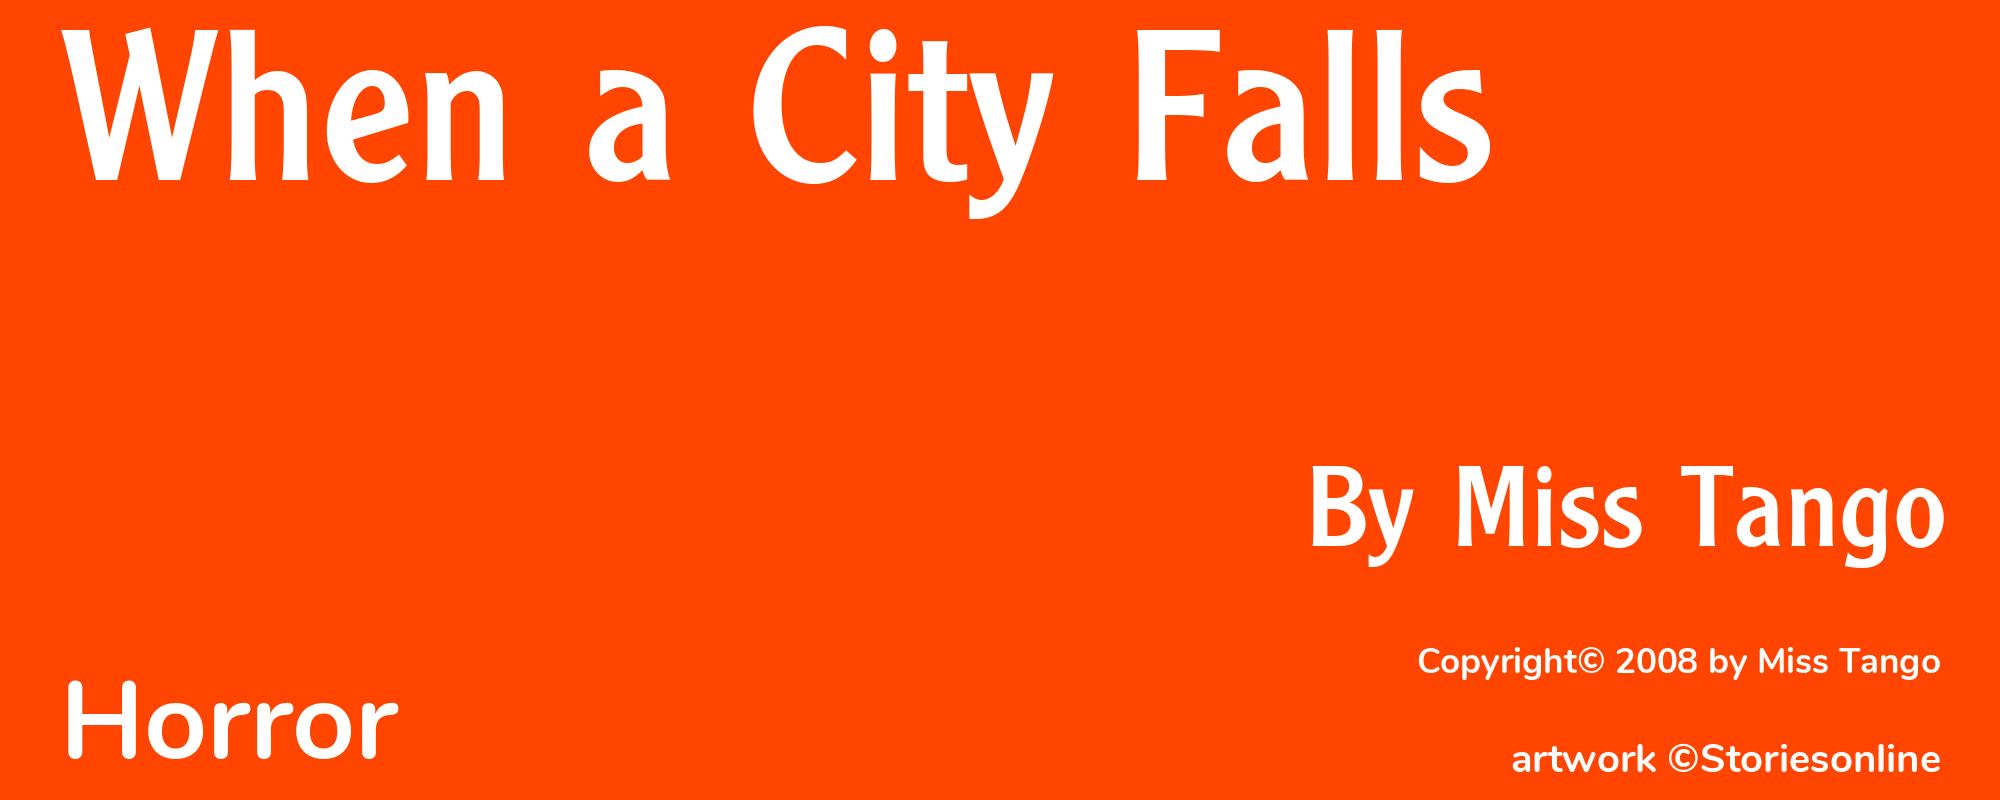 When a City Falls - Cover